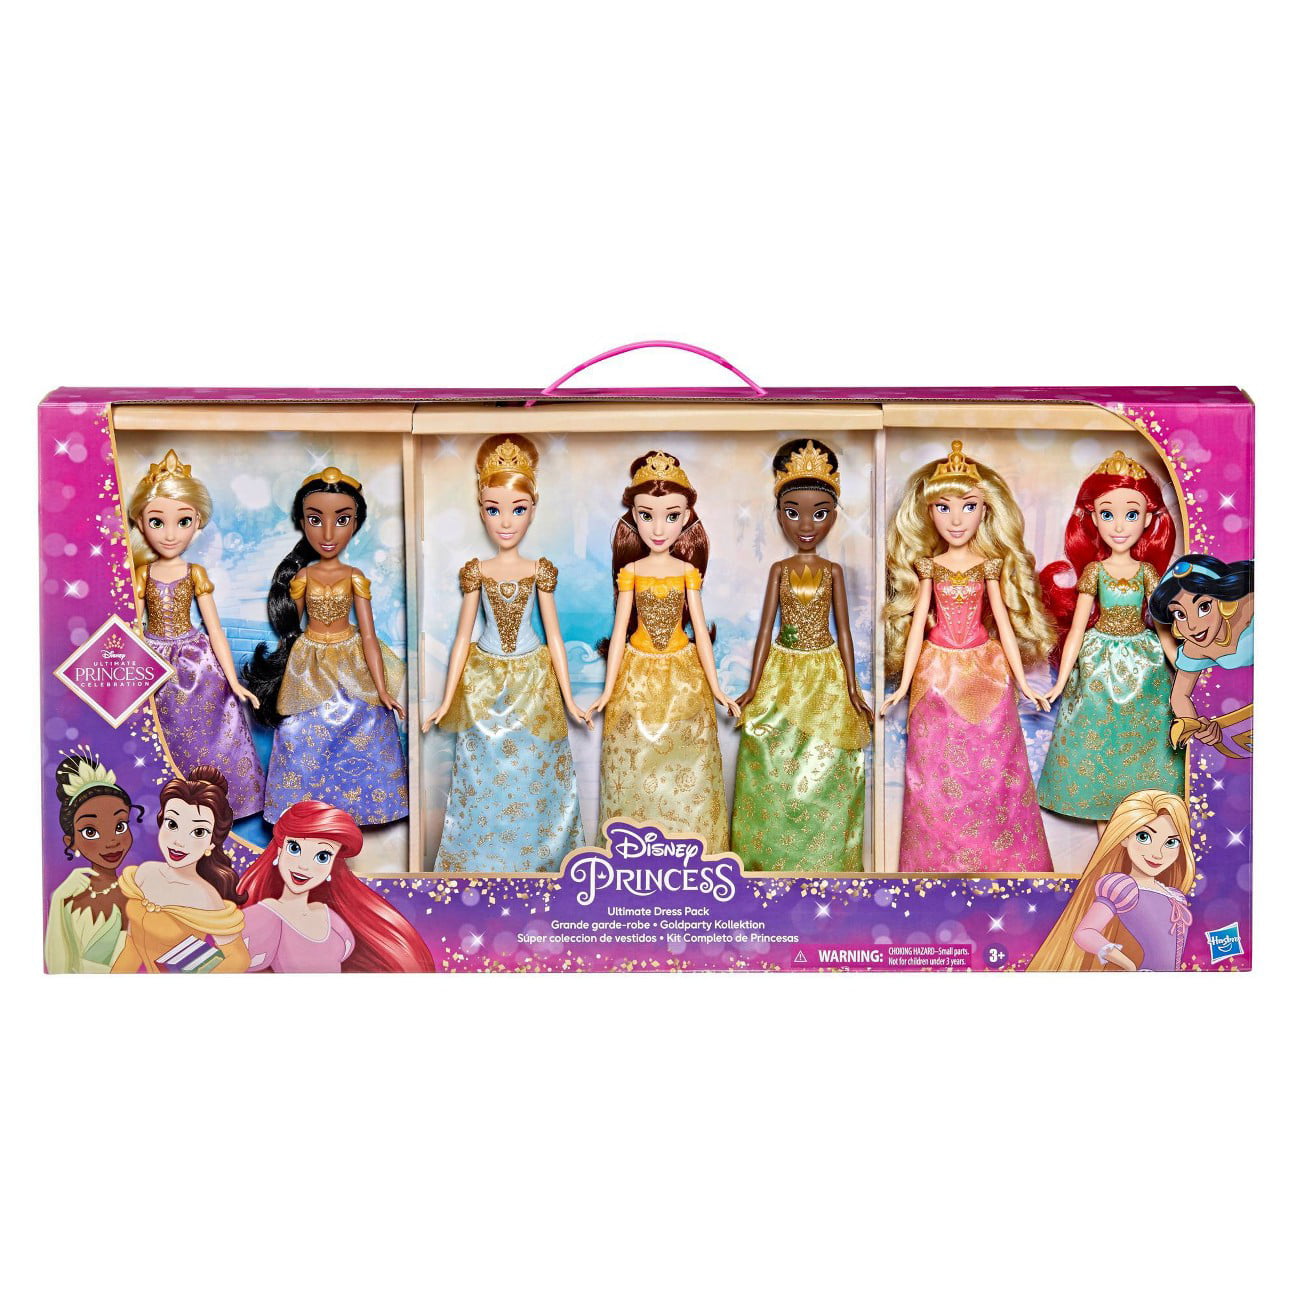 Disney Princess Ultimate Dress Pack Collection of 7 Disney Princess Fashion Dolls Walmart.com